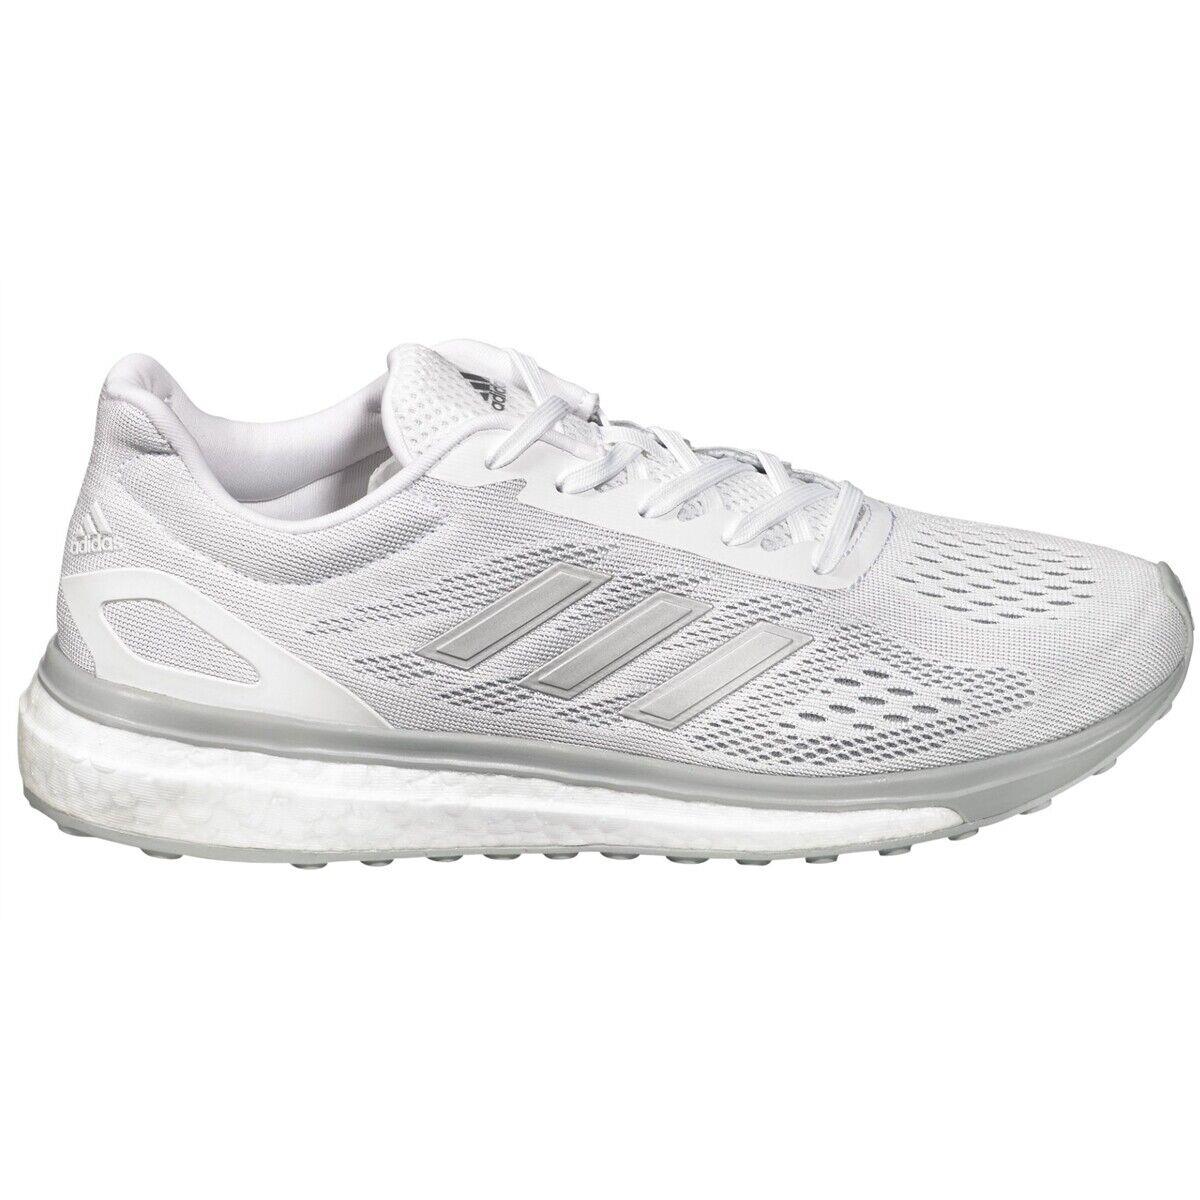 Adidas Women Athletic Shoes Response LT W Running Shoes Black White